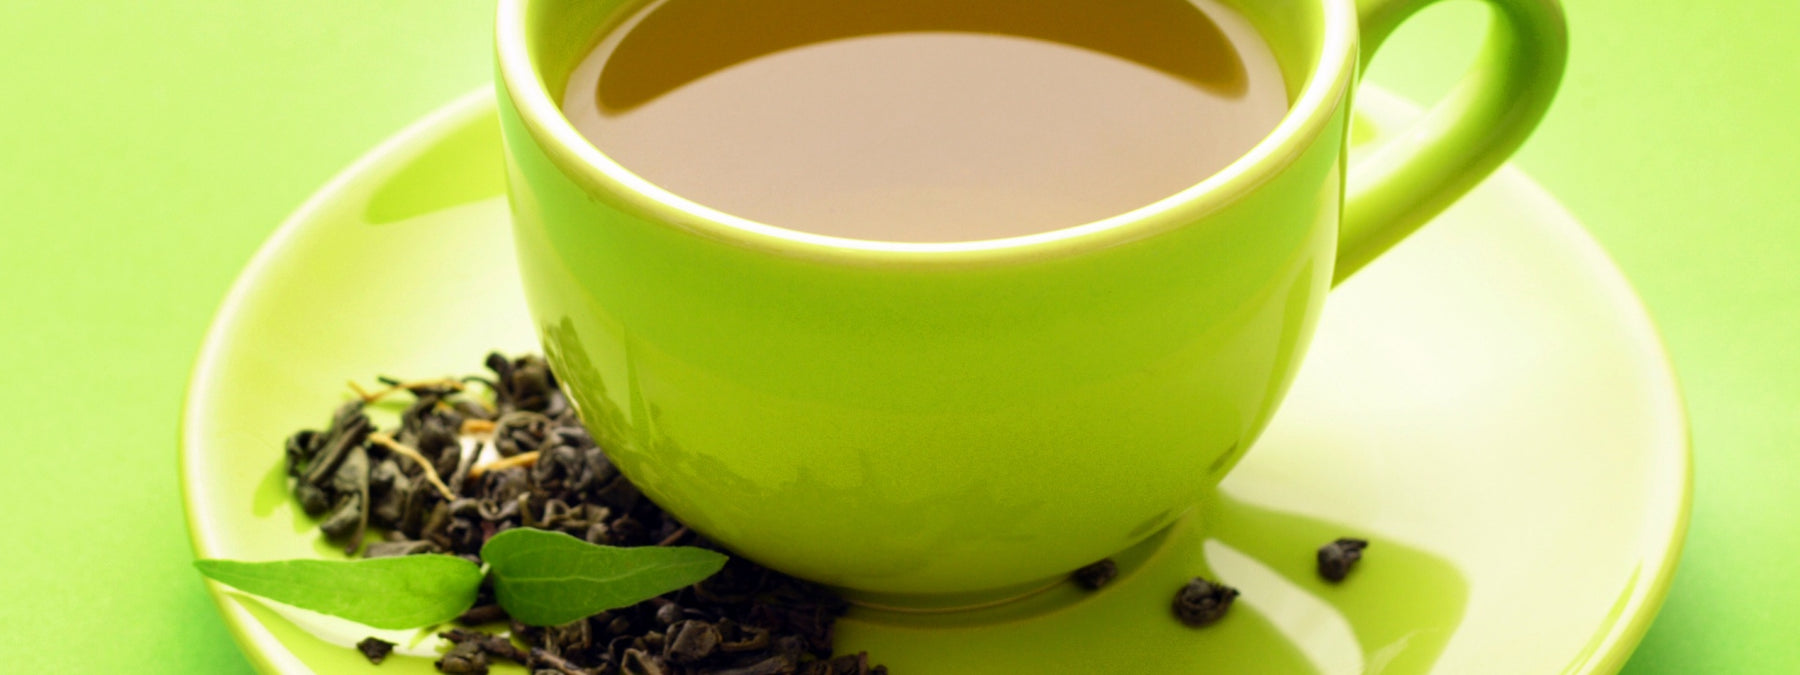 Oolong Tea - History, Uses, and Benefits